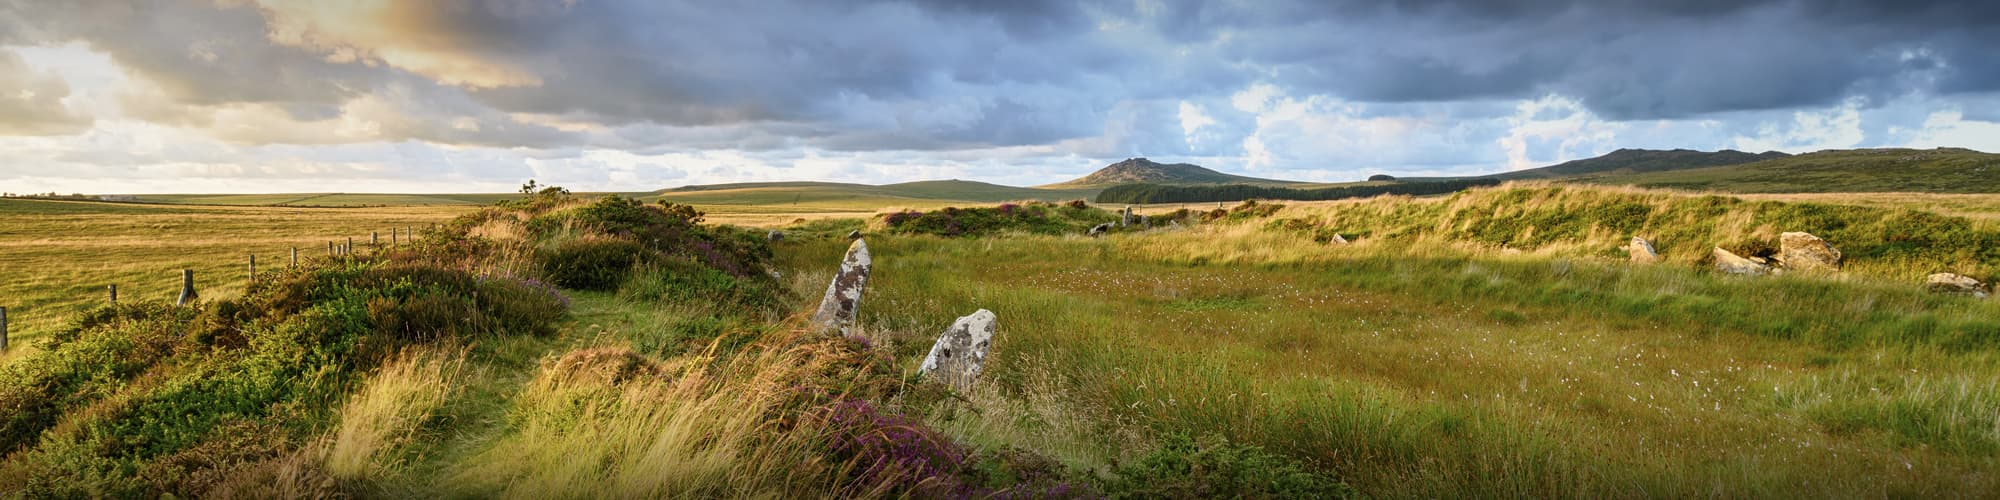 Randonnée Iles Anglo-normandes © Helen Hotson/iStock